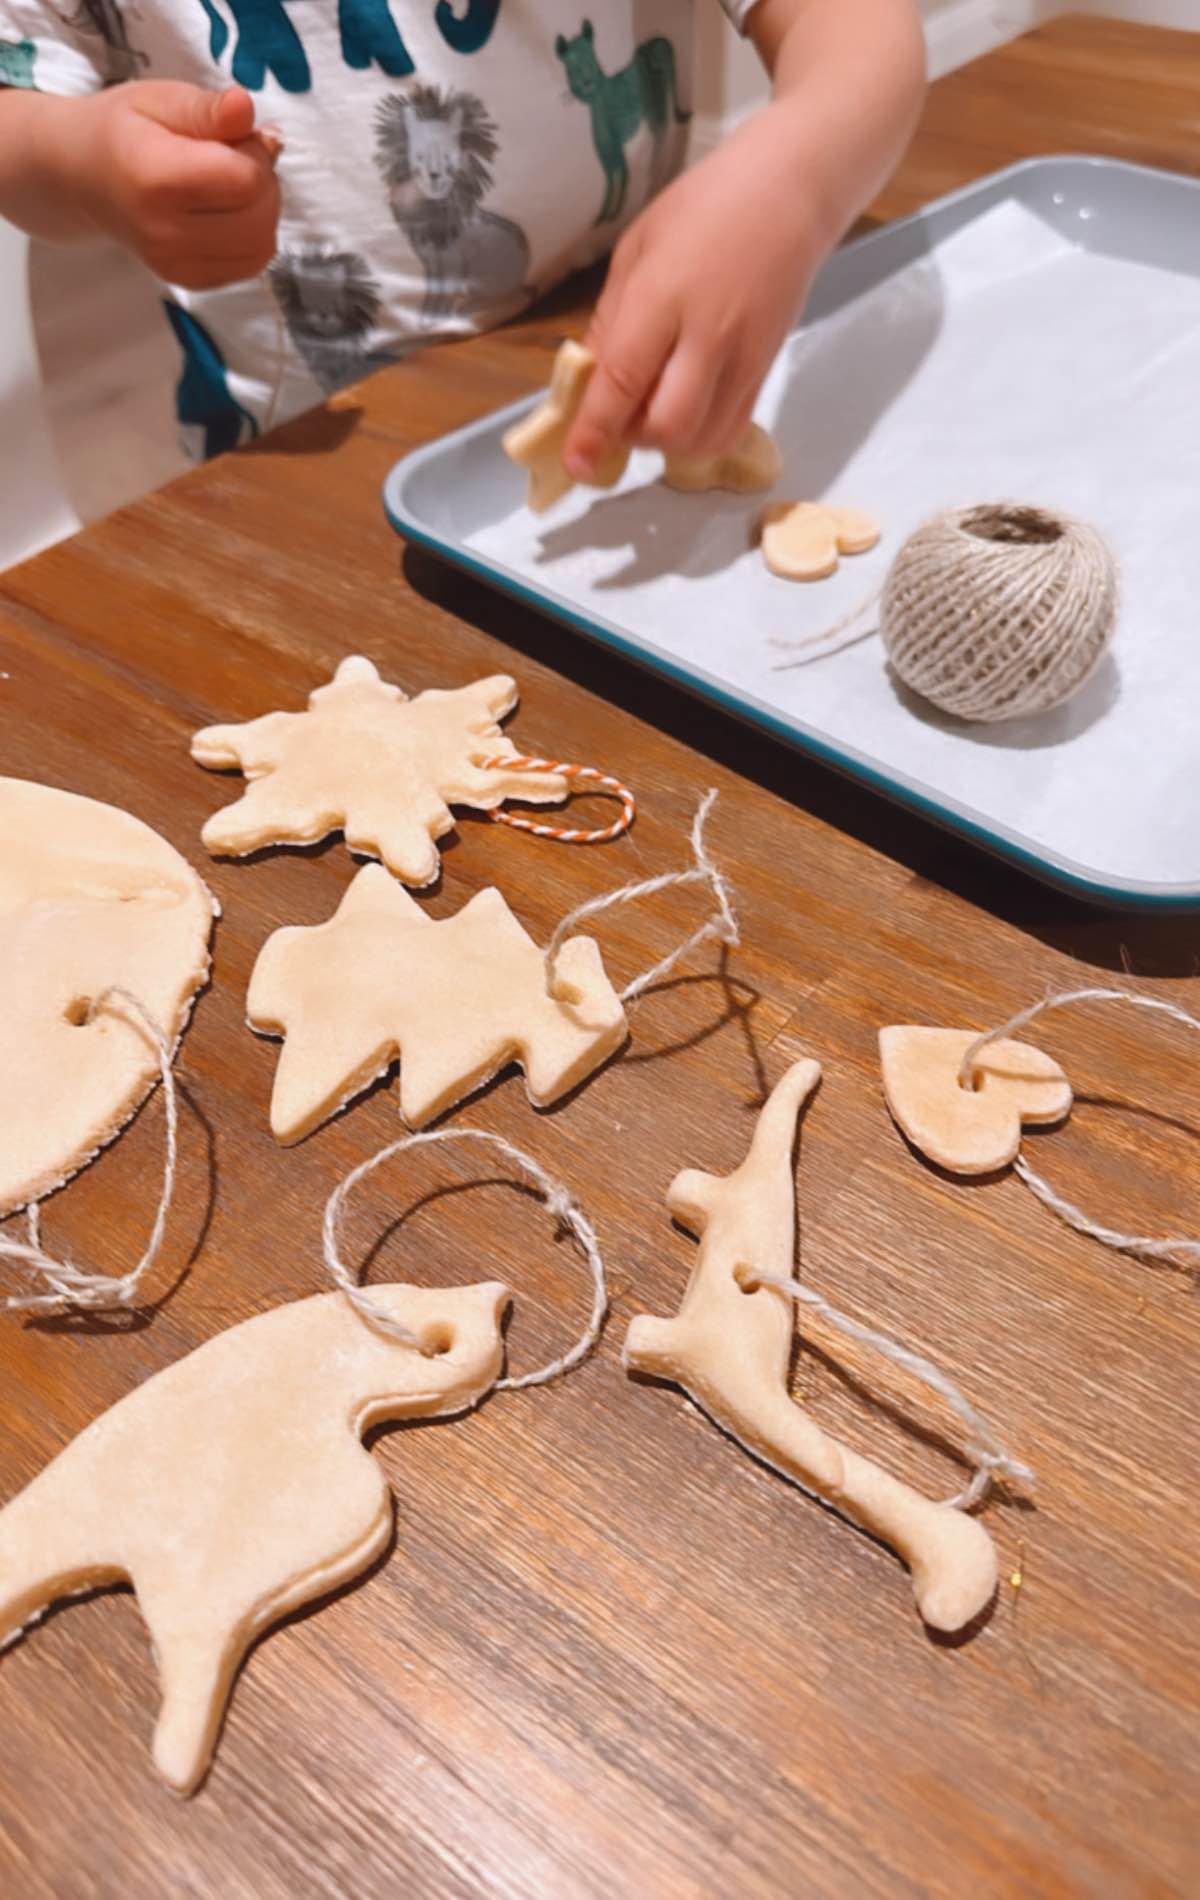 Kid threading kitchen twine through DIY salt dough ornaments. 